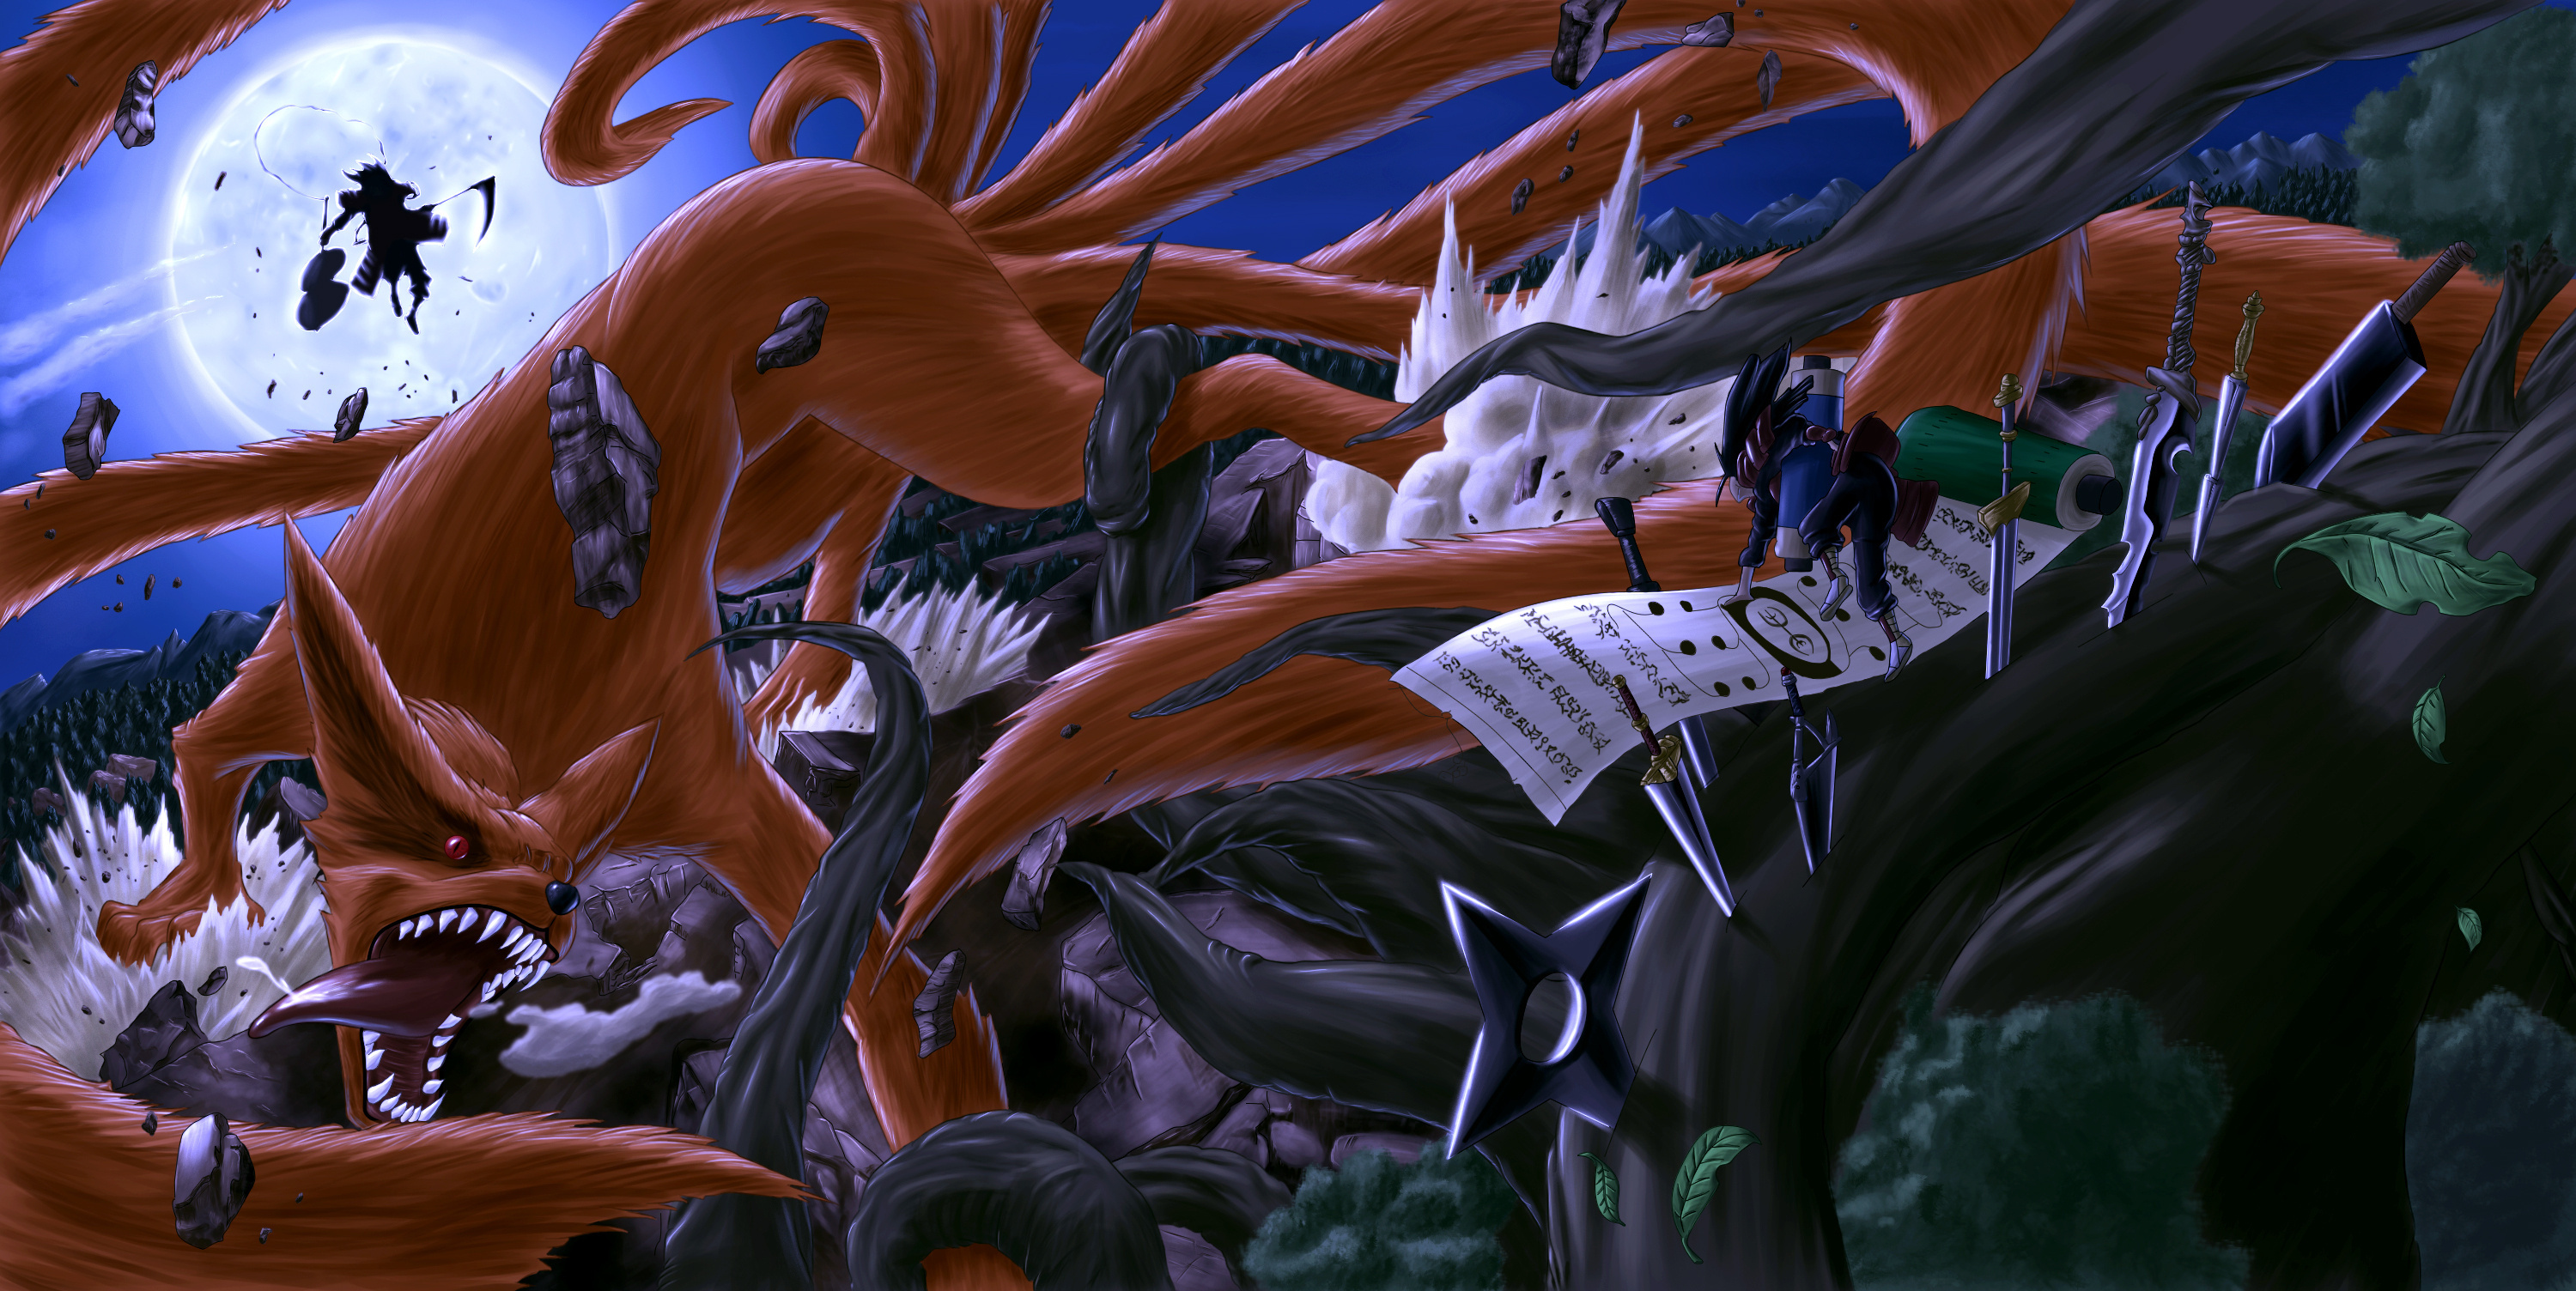 Naruto HD Wallpaper | Background Image | 3000x1504 | ID ...